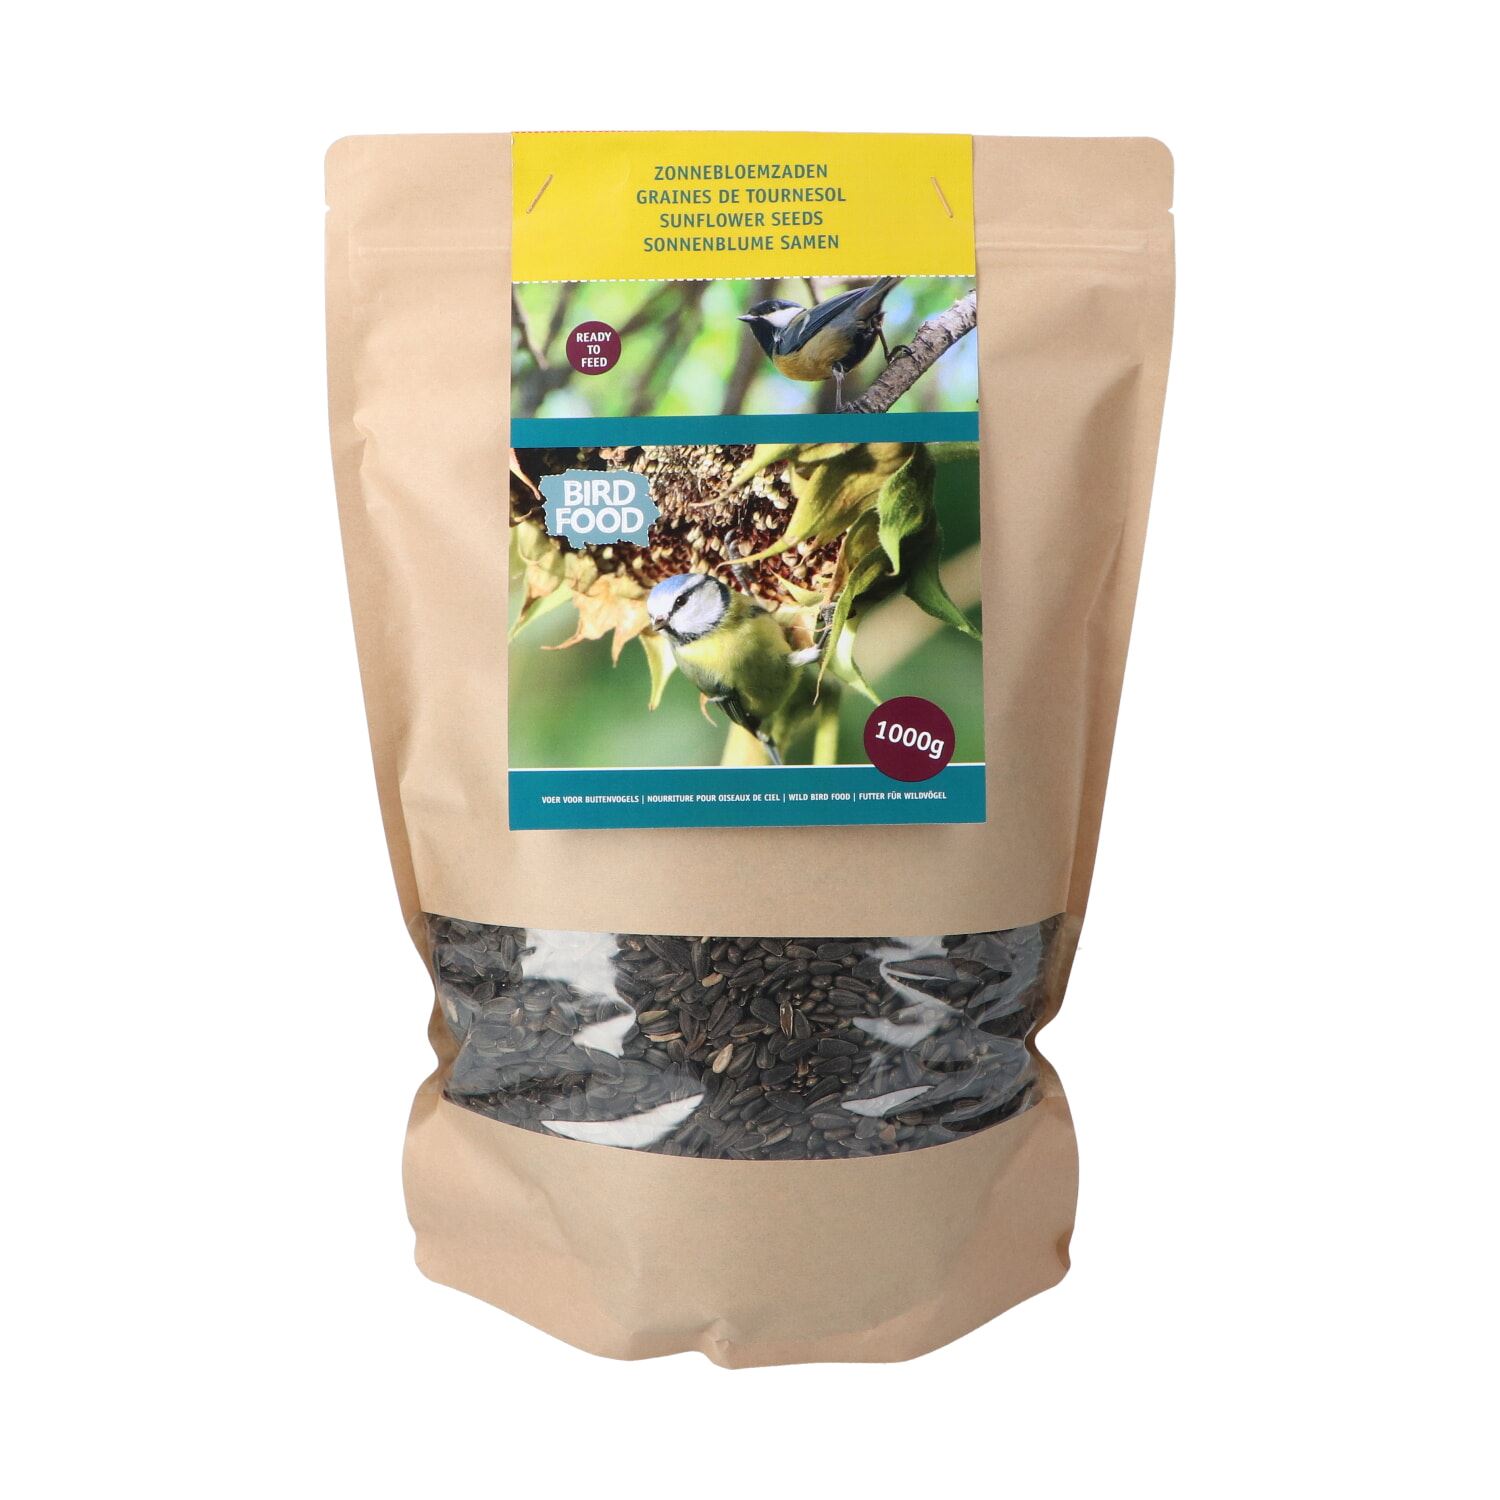 Bûten Food - Sunflower seeds in durable packaging - 1 kg